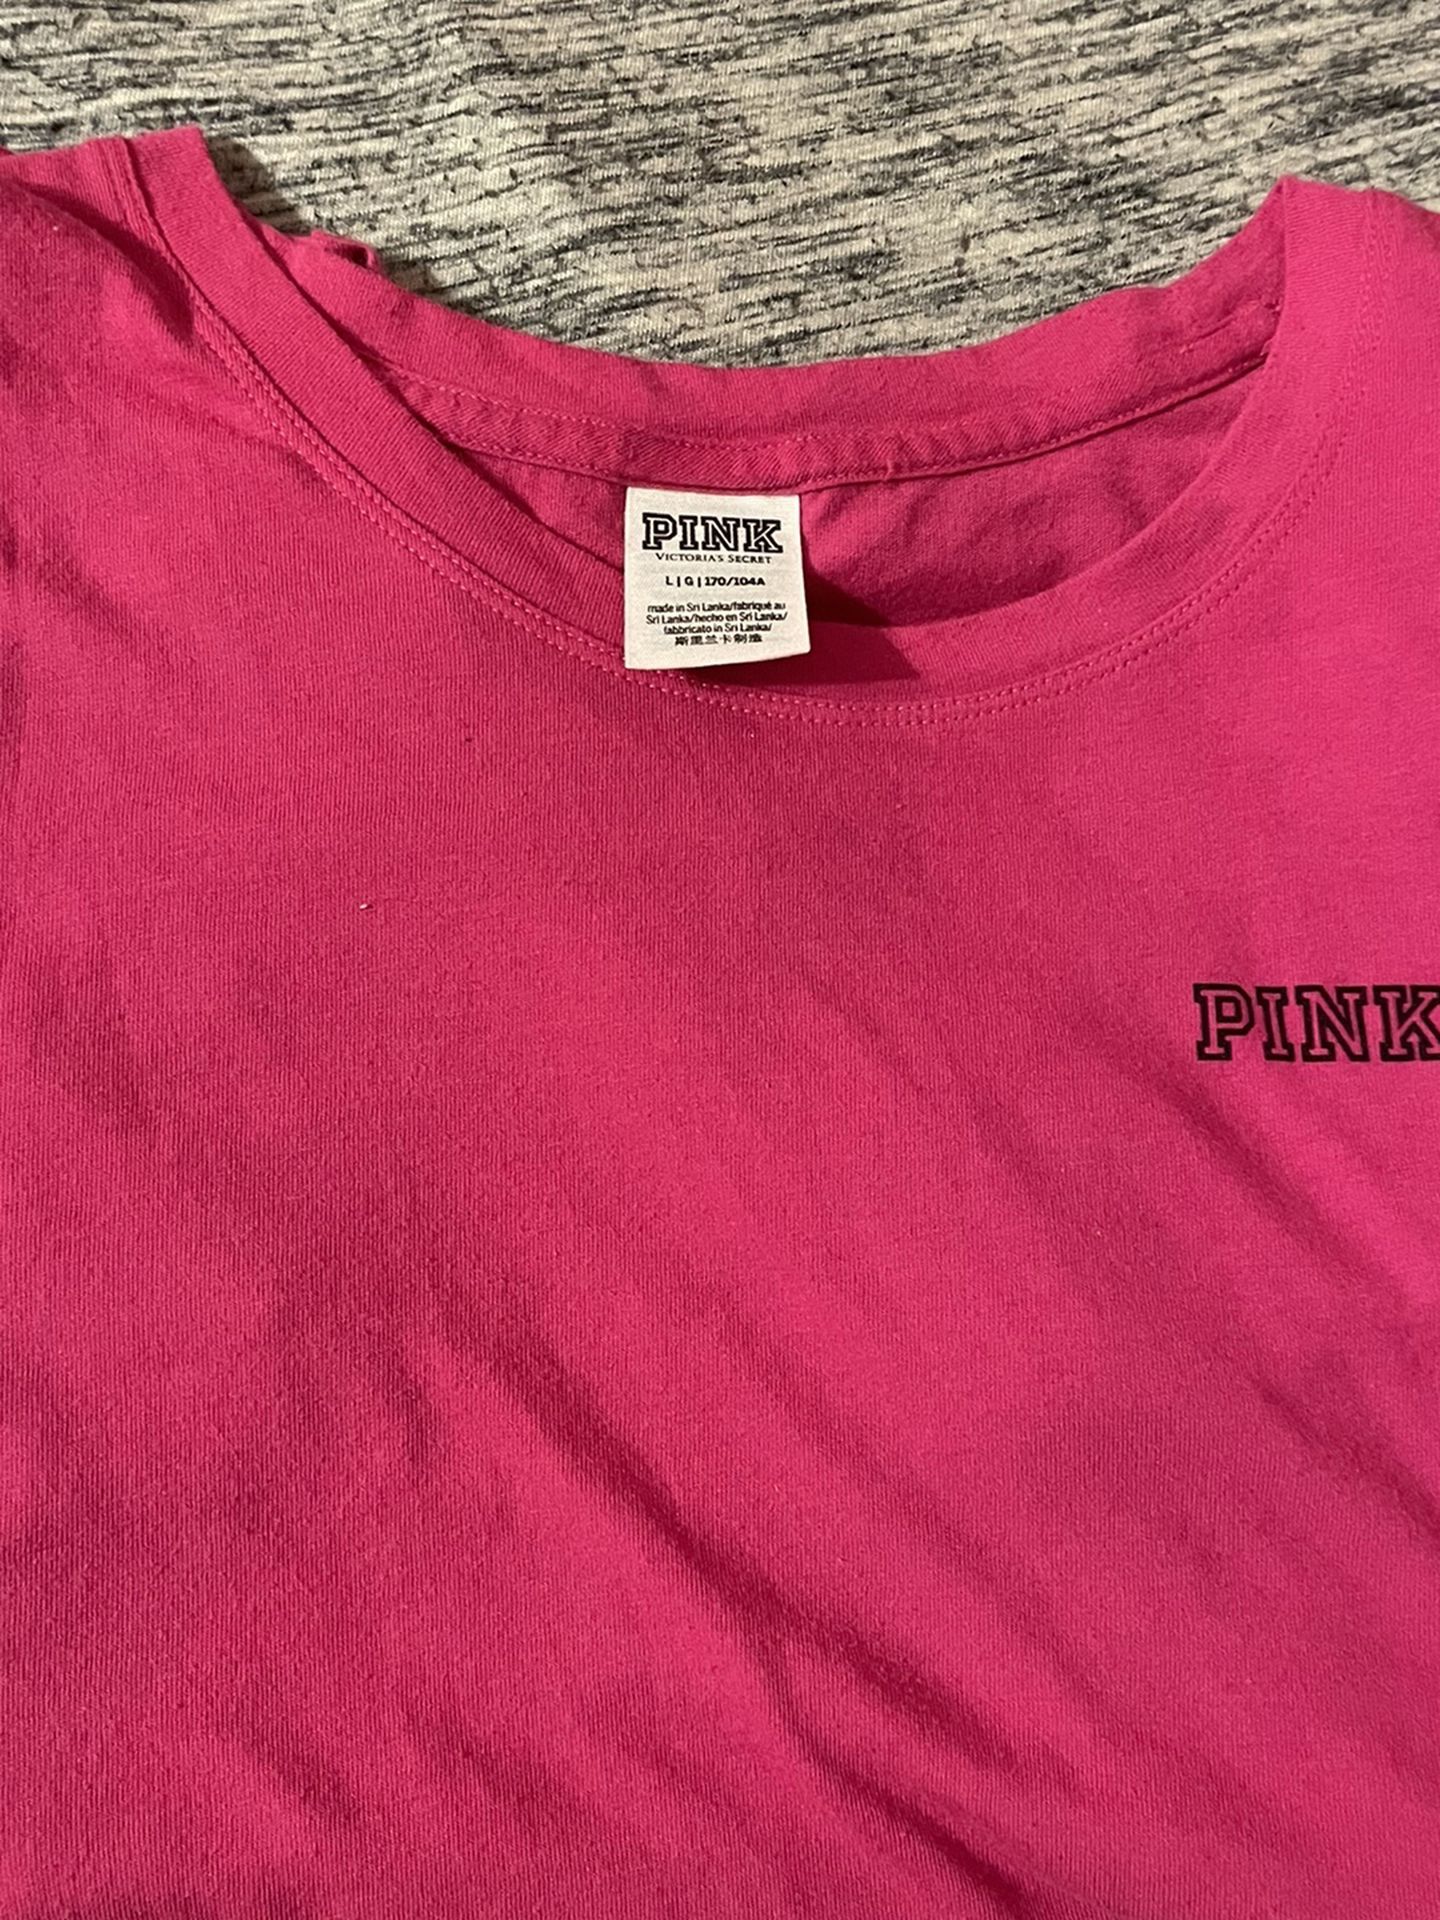 PINK Shirt!!!💗